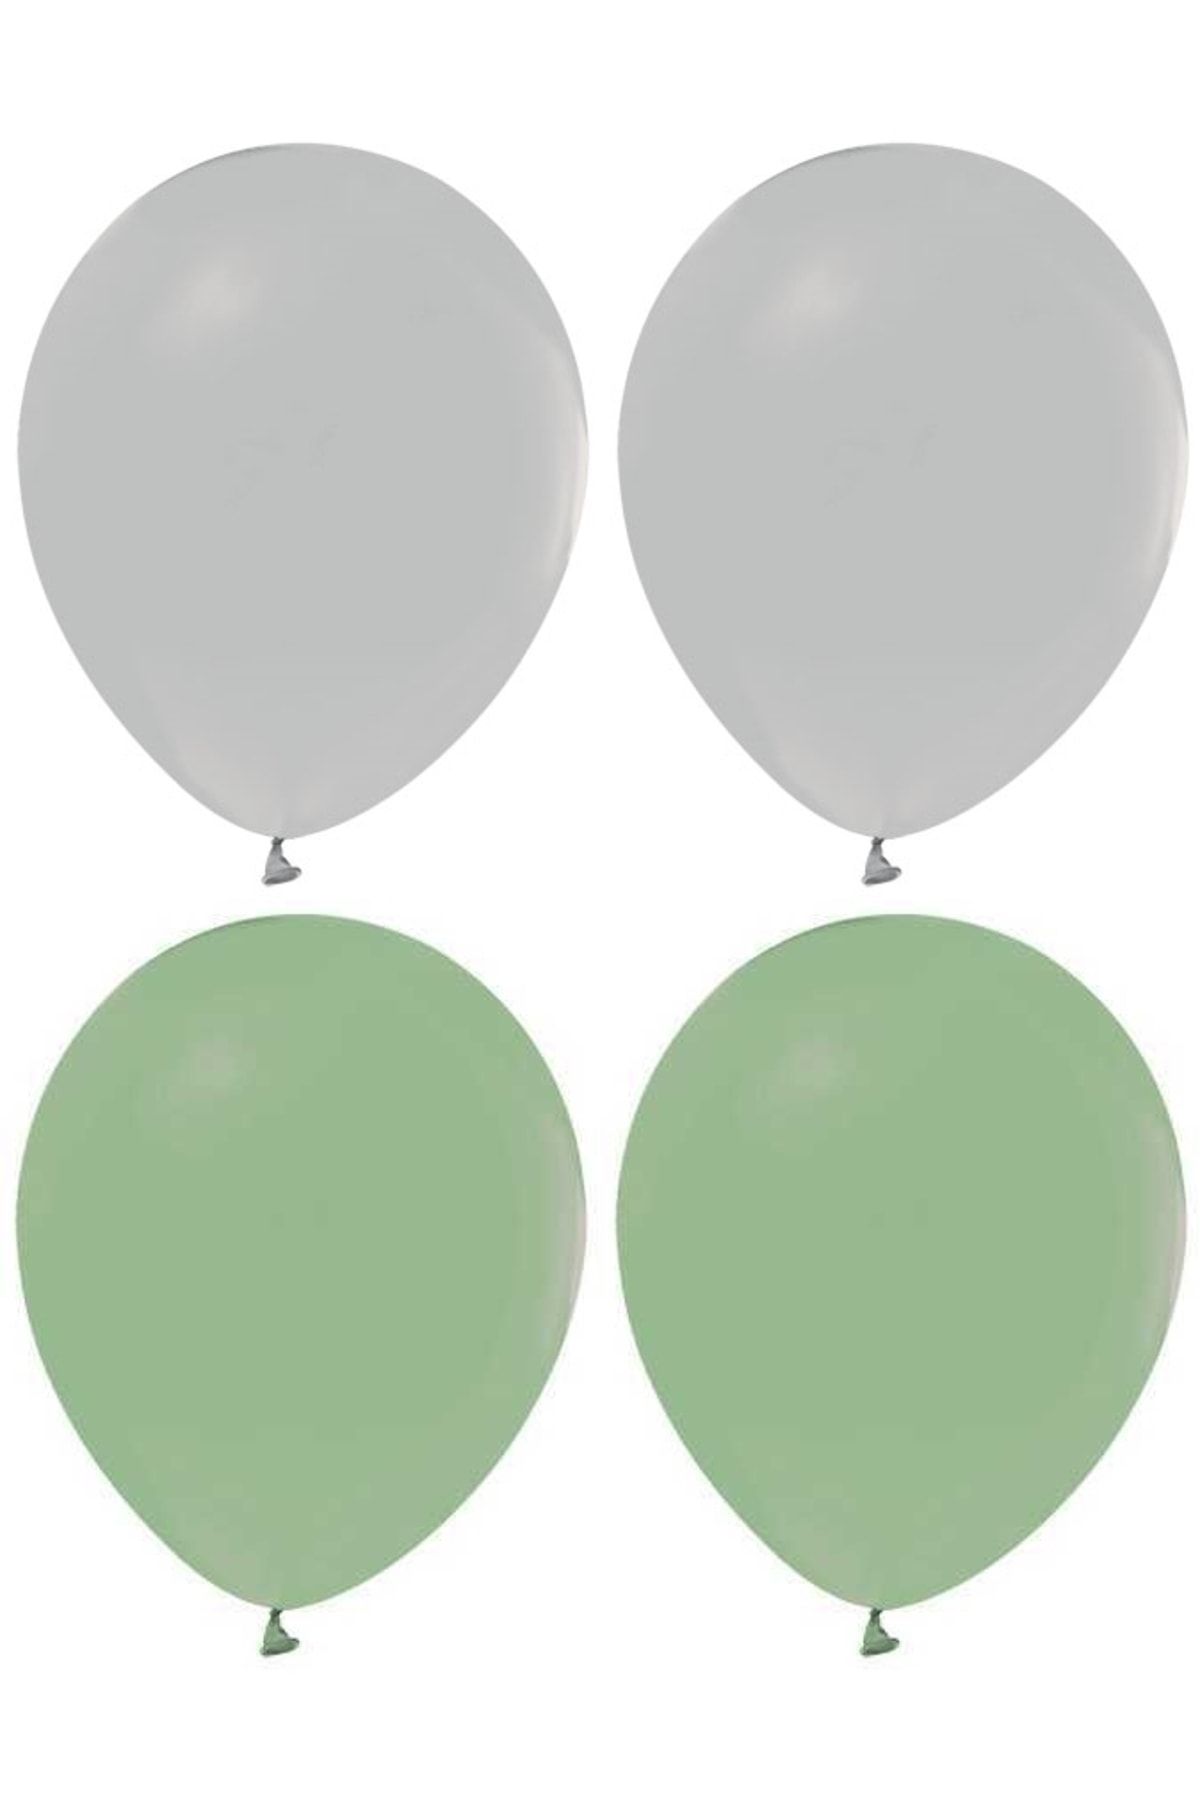 HKNYS Kuf Yeşili Ve Gri Renk Karışık Lateks Pastel Balon 25 Adet